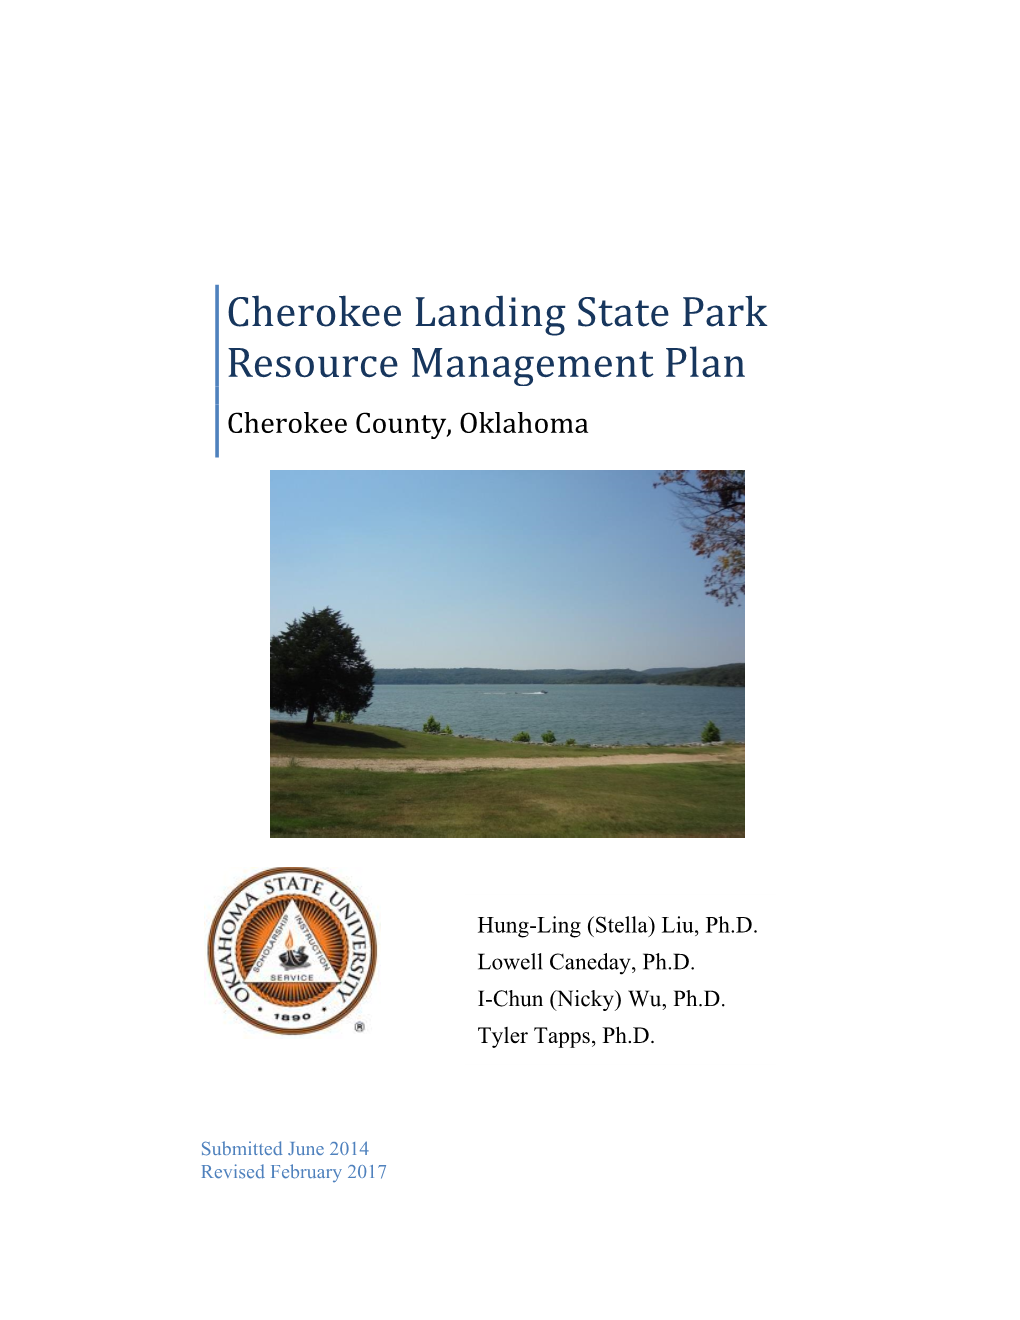 Cherokee Landing State Park Resource Management Plan